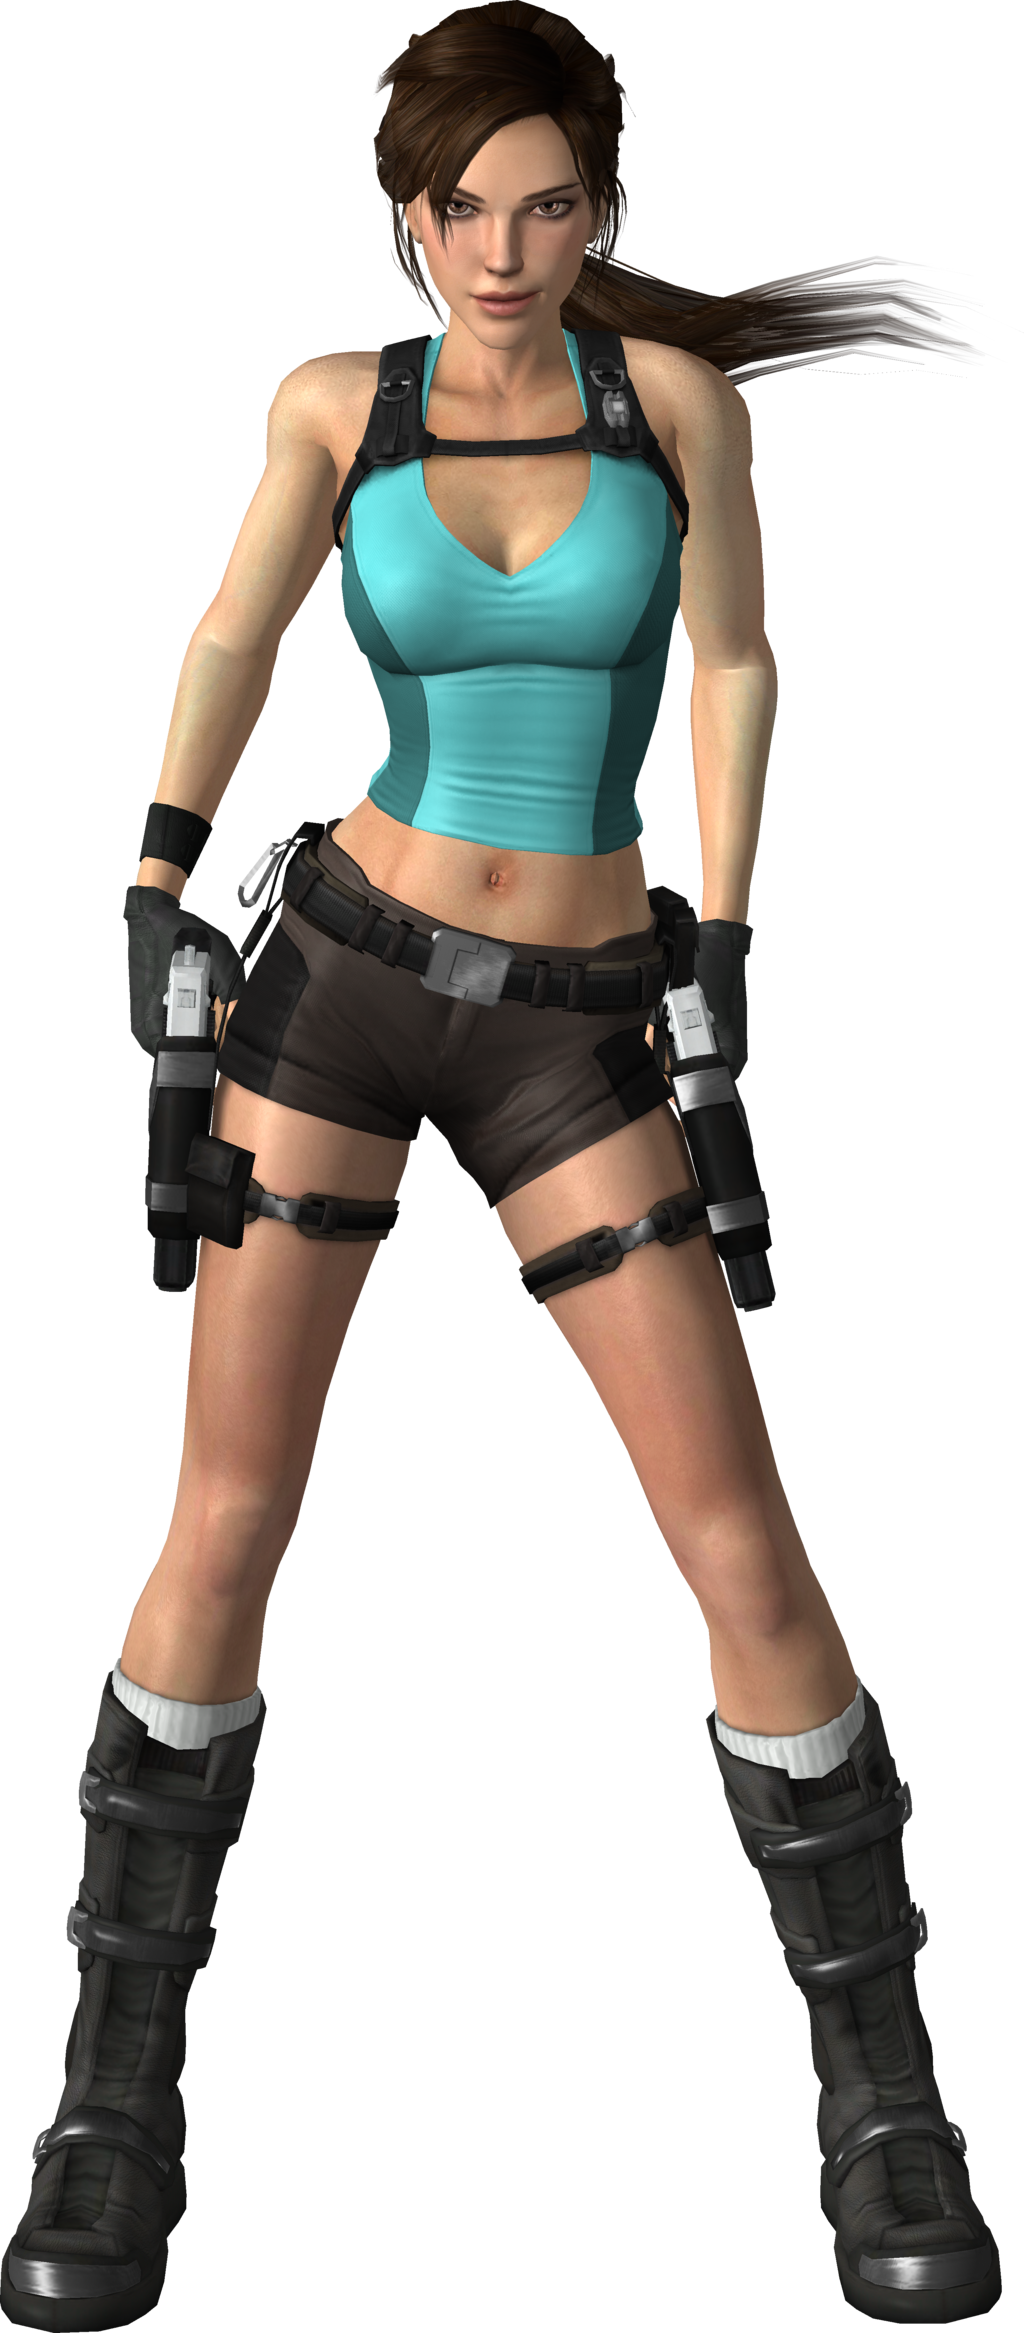 Lara Croft Photos PNG Image